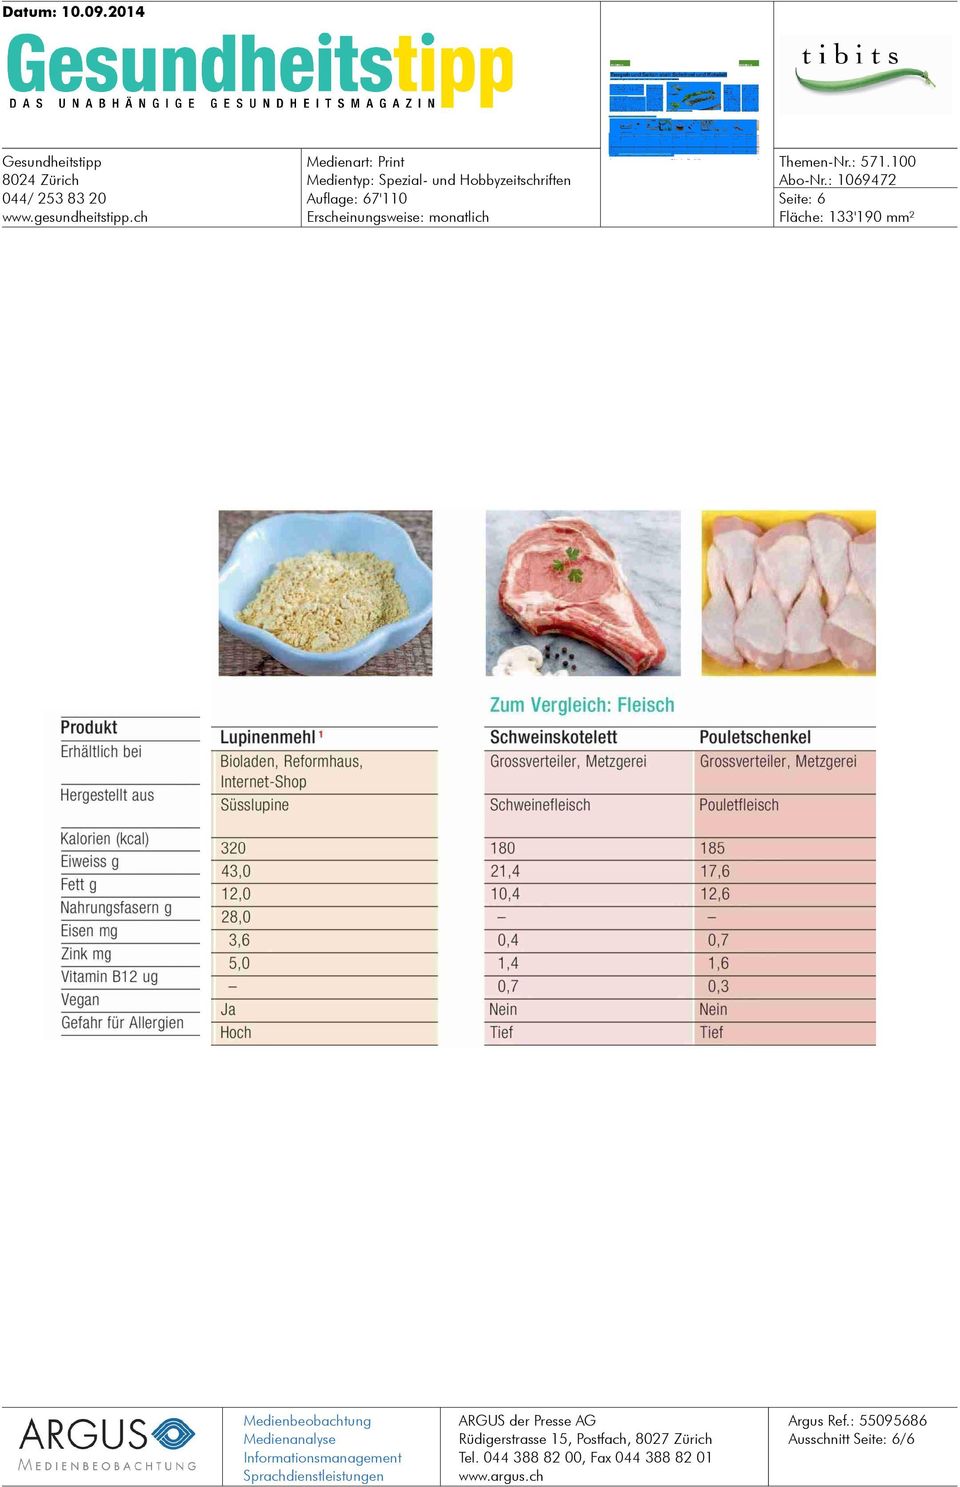 Schweinefleisch Pouletfleisch Kalorien (kcal) Eiweiss g Fett g Nahrungsfasern g Eisen mg Zink mg Vitamin B12 ug Vegan